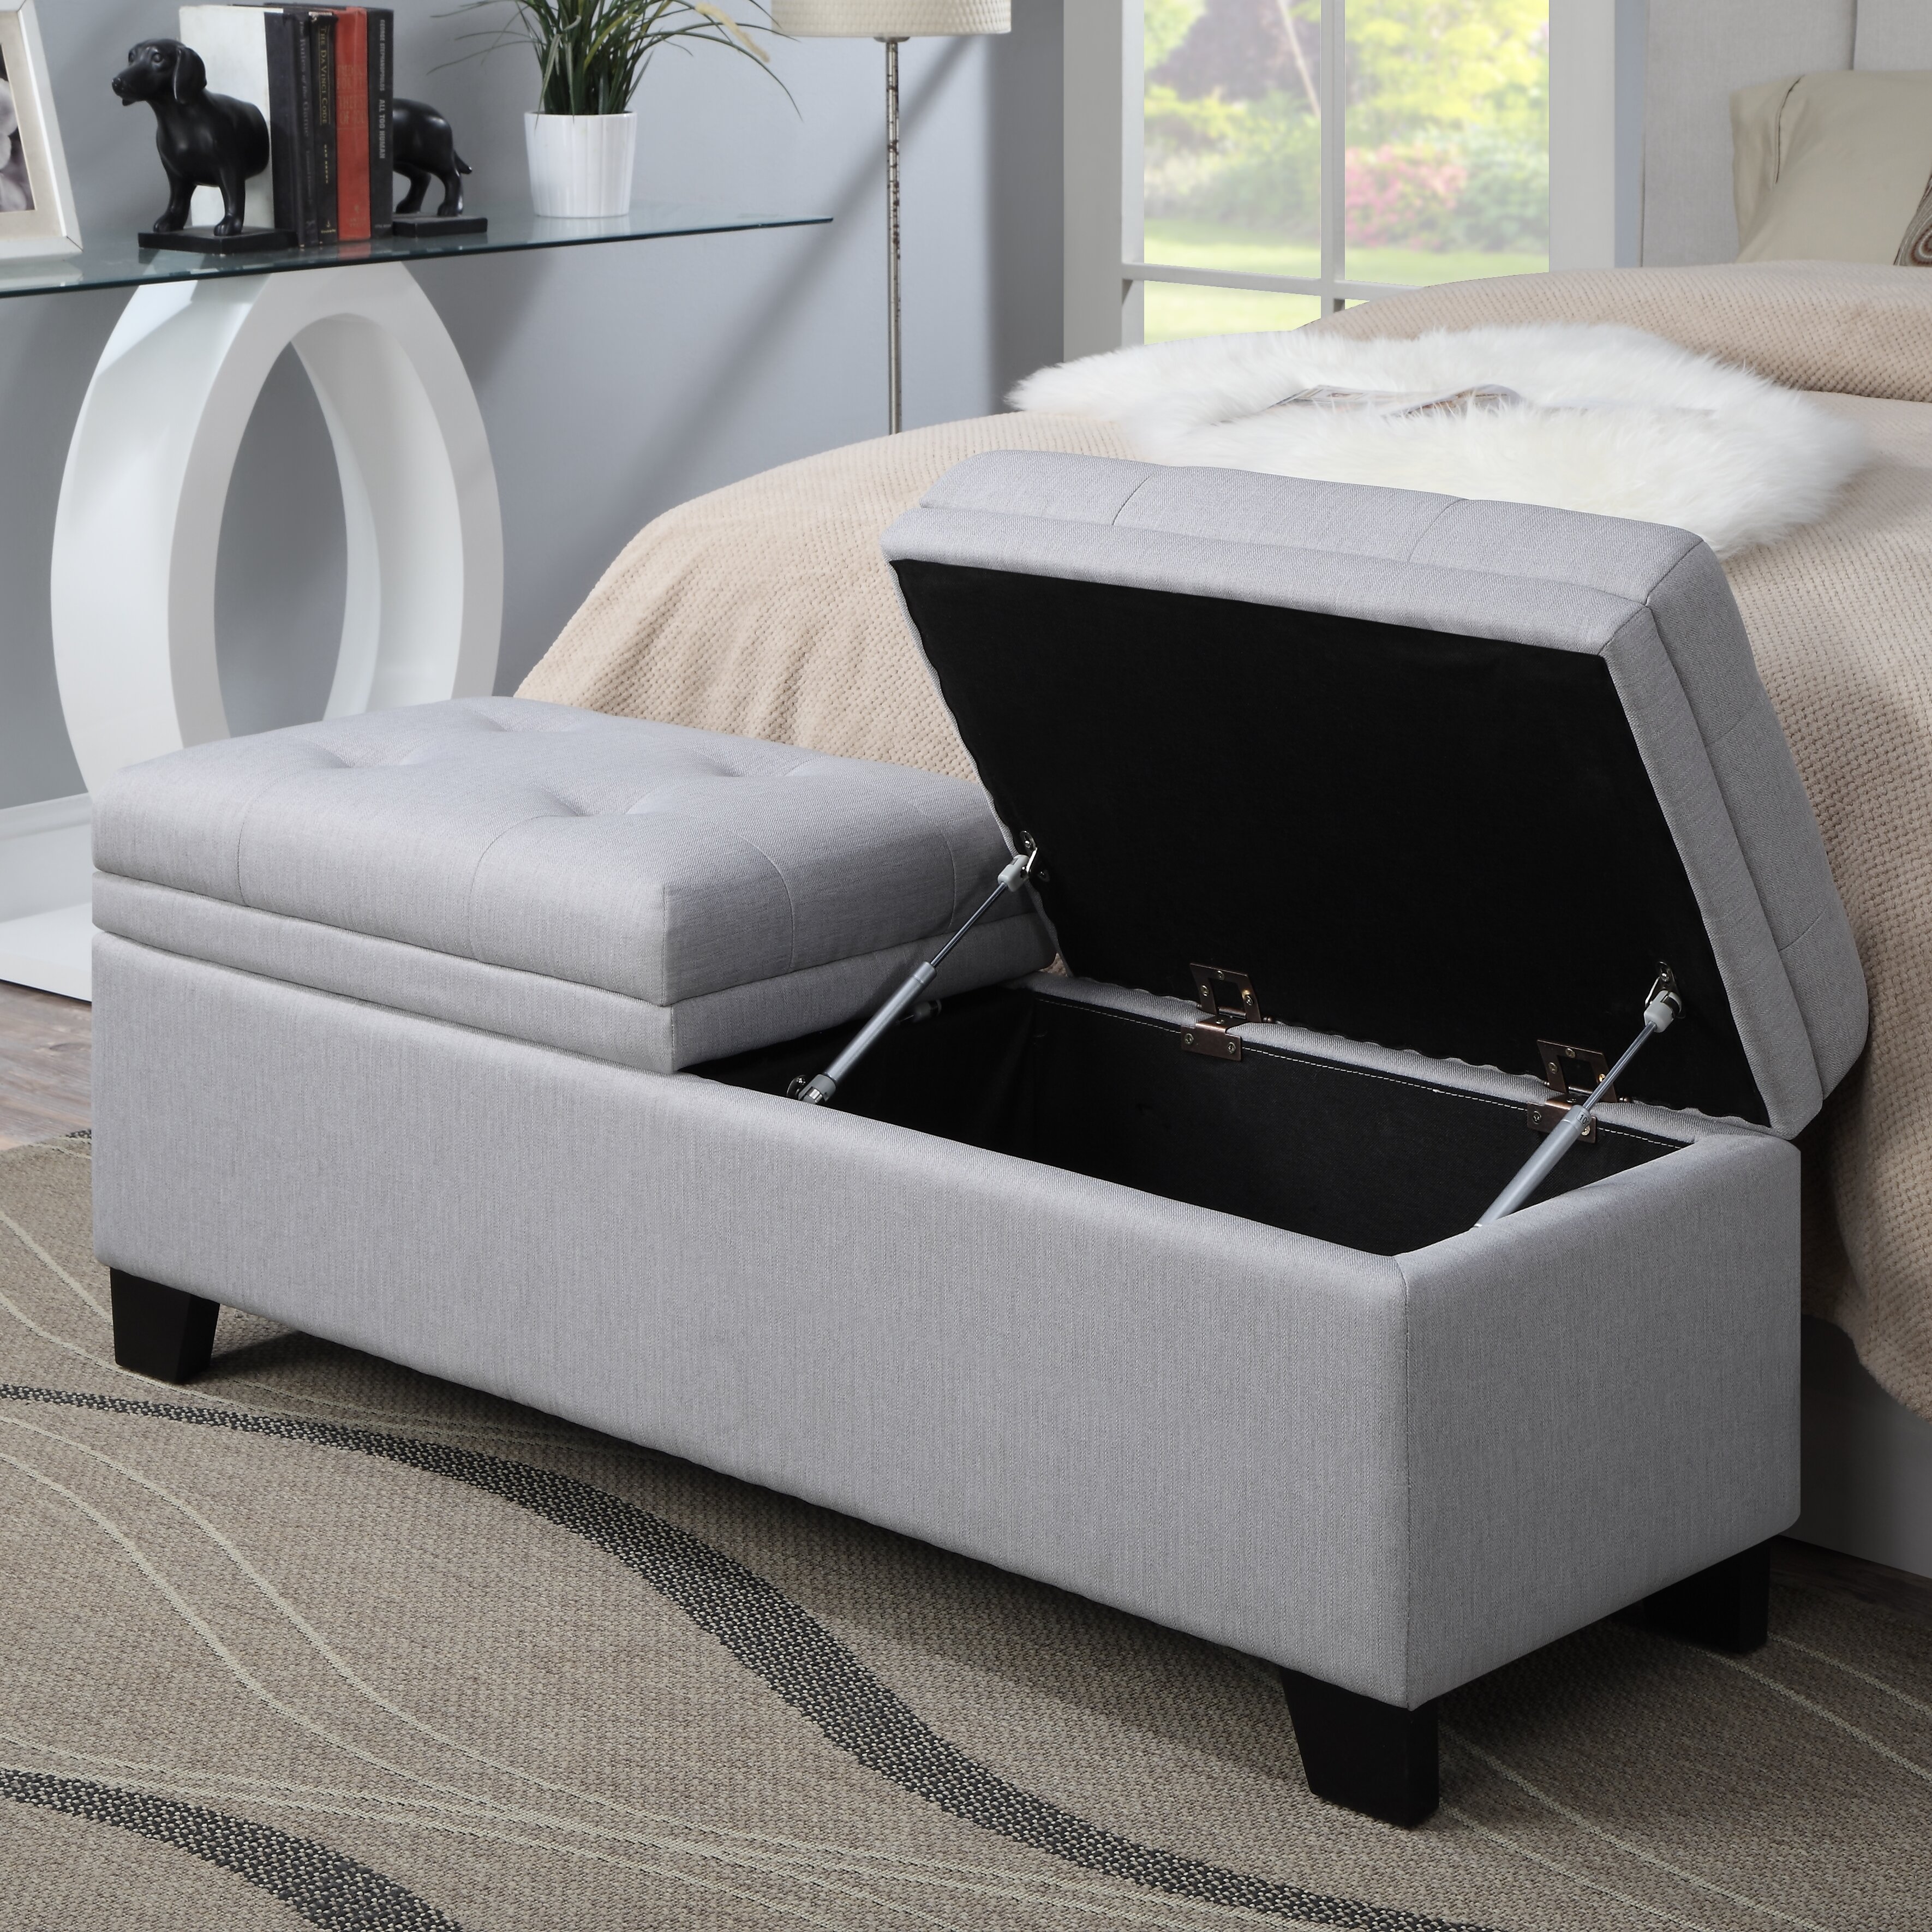 Modern Bedroom Storage Bench Ideas for Simple Design